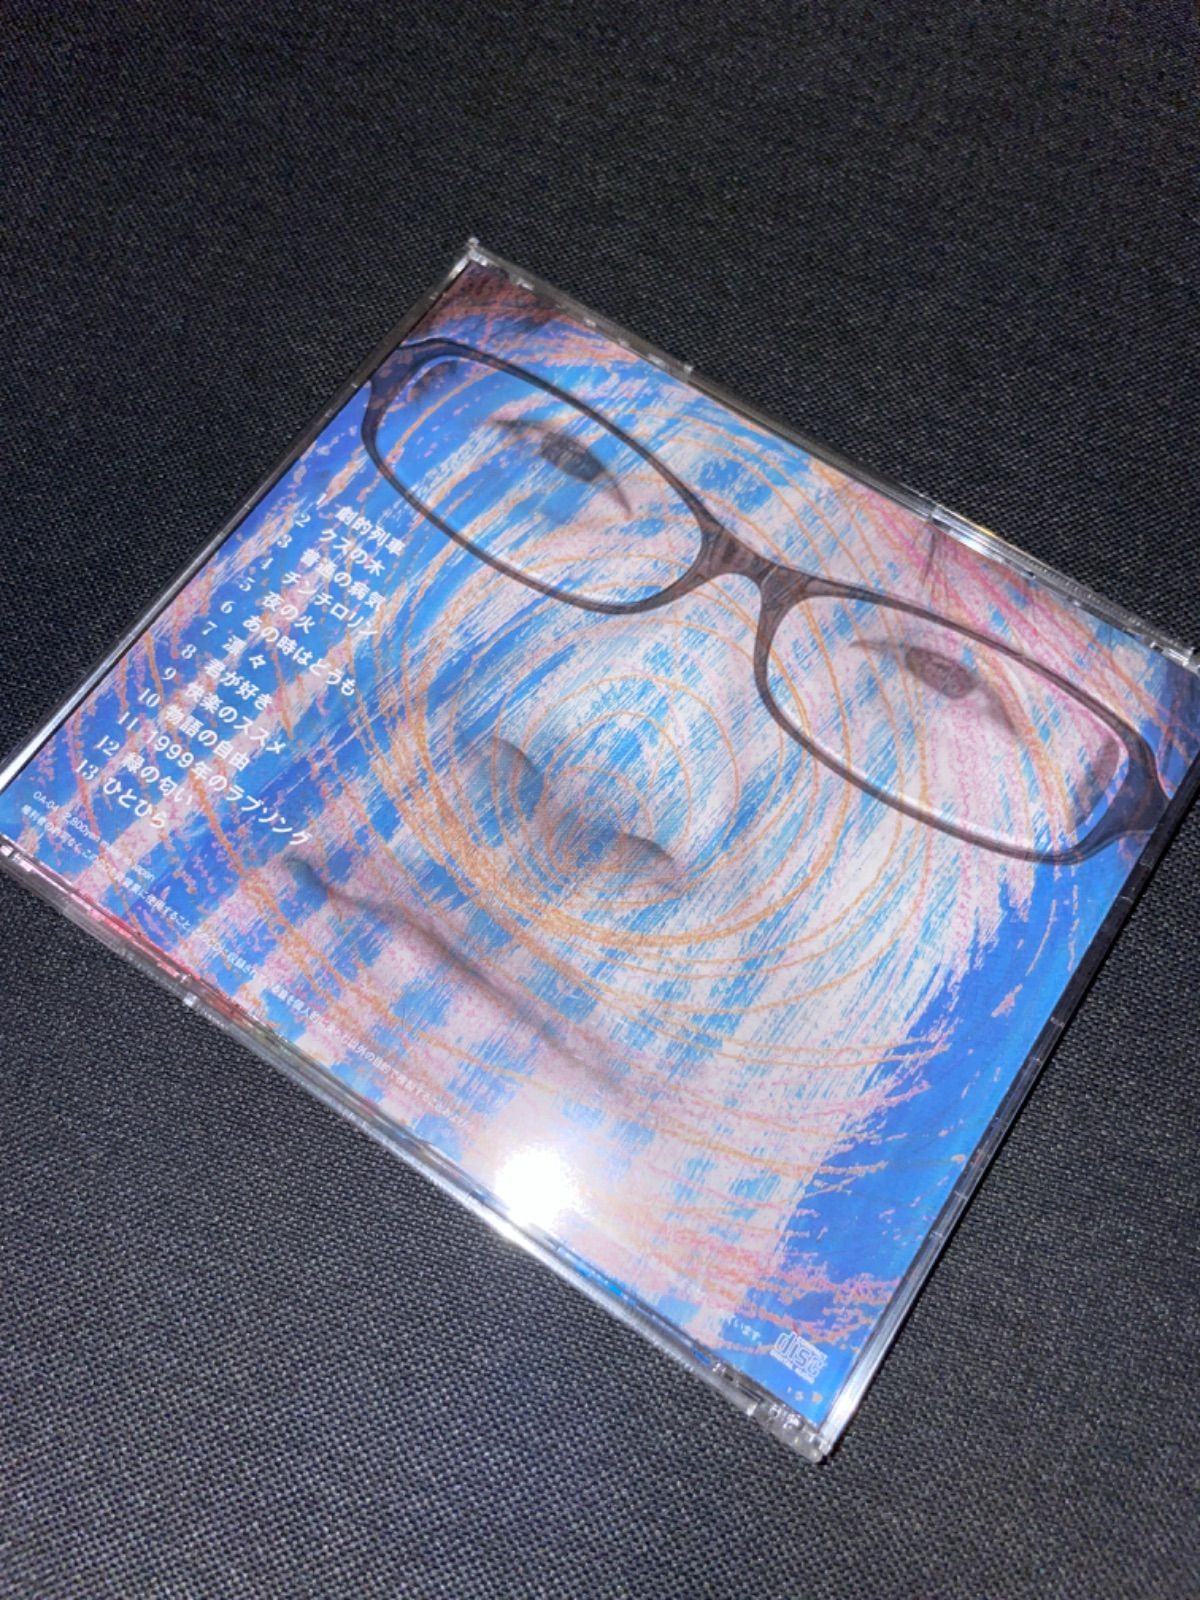 S658)廃盤CD 六角精児/下田逸郎 CD 「緑の匂い」 - Minami records